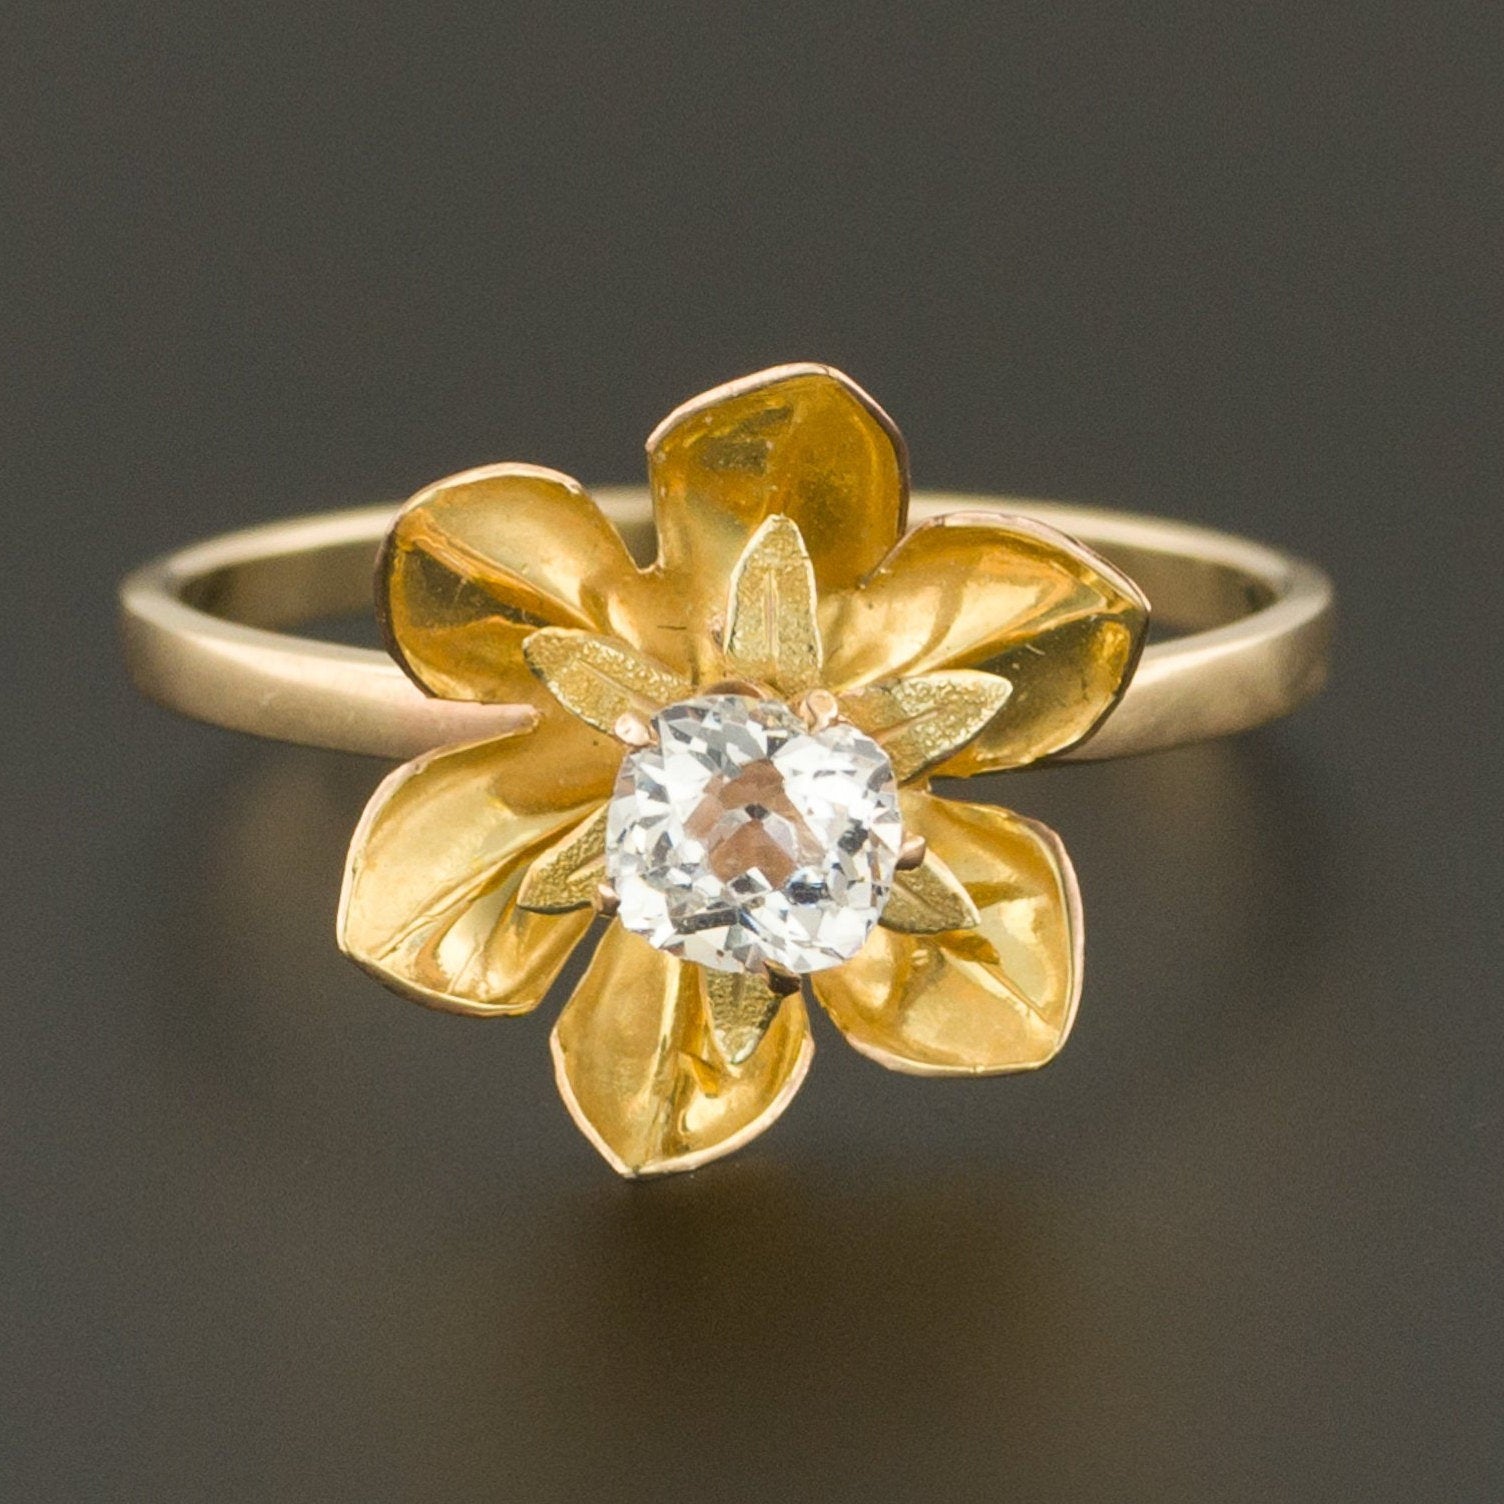 Flower Ring | Gold Flower Ring | 14k Gold Ring | Antique Pin Conversion Ring